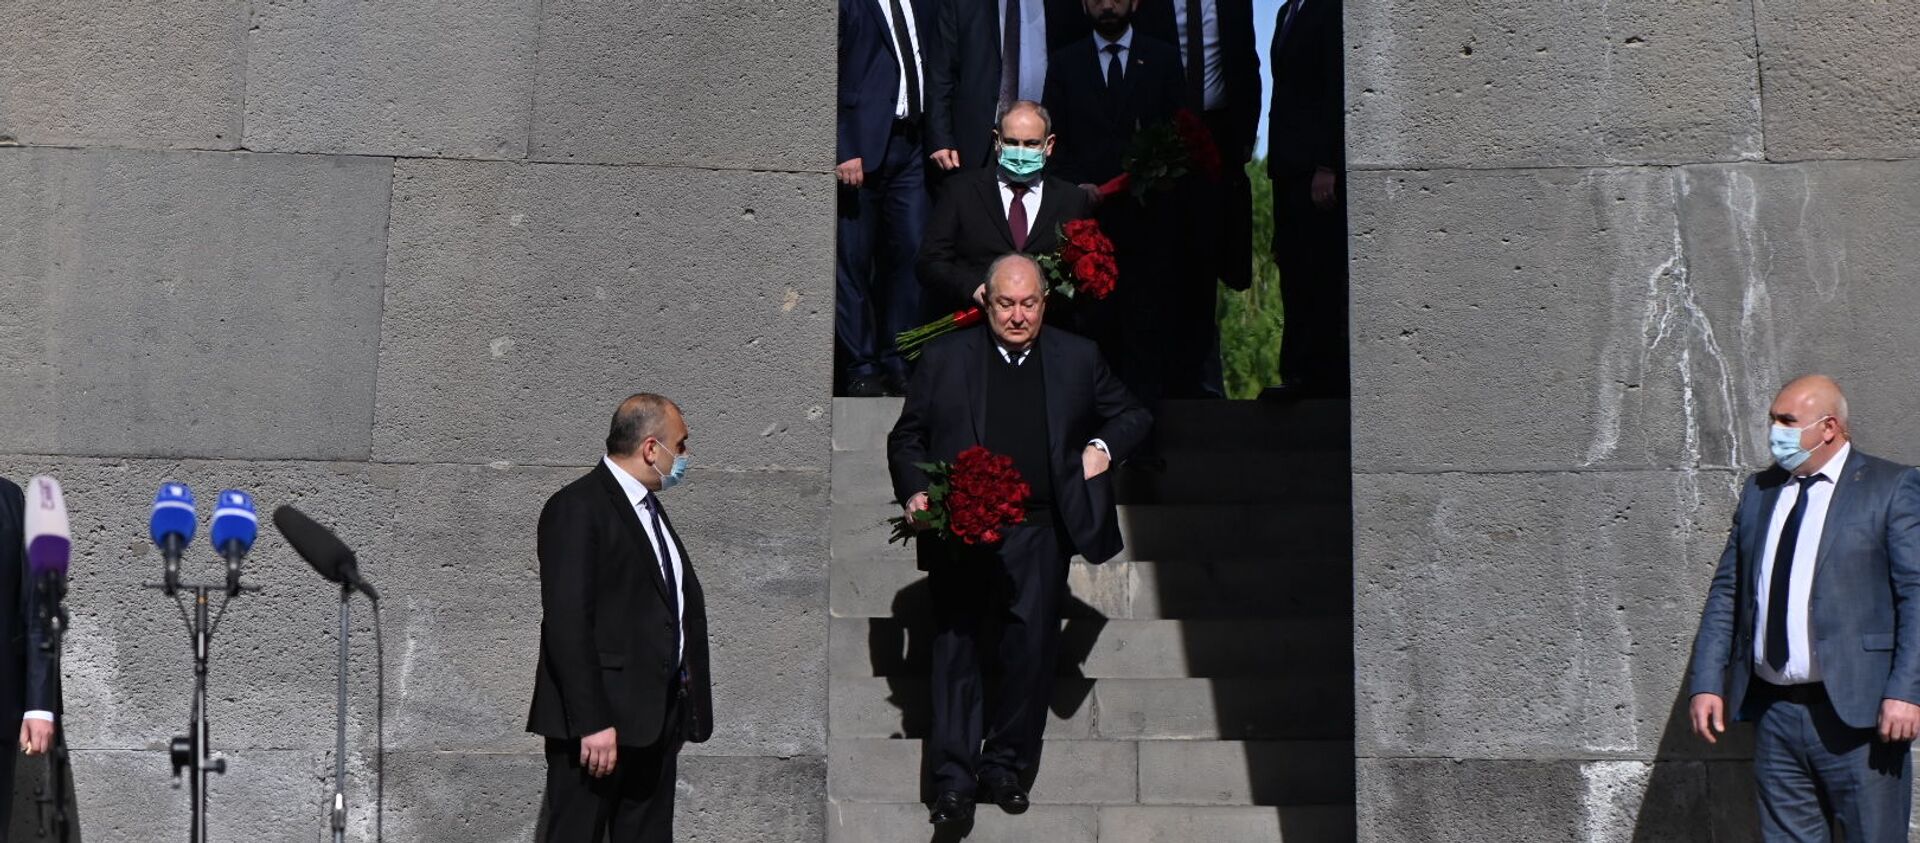 Армен Саркисян посетил мемориальный комплекс Цицернакаберд (24 апреля 2021). Ереван - Sputnik Армения, 1920, 24.04.2021